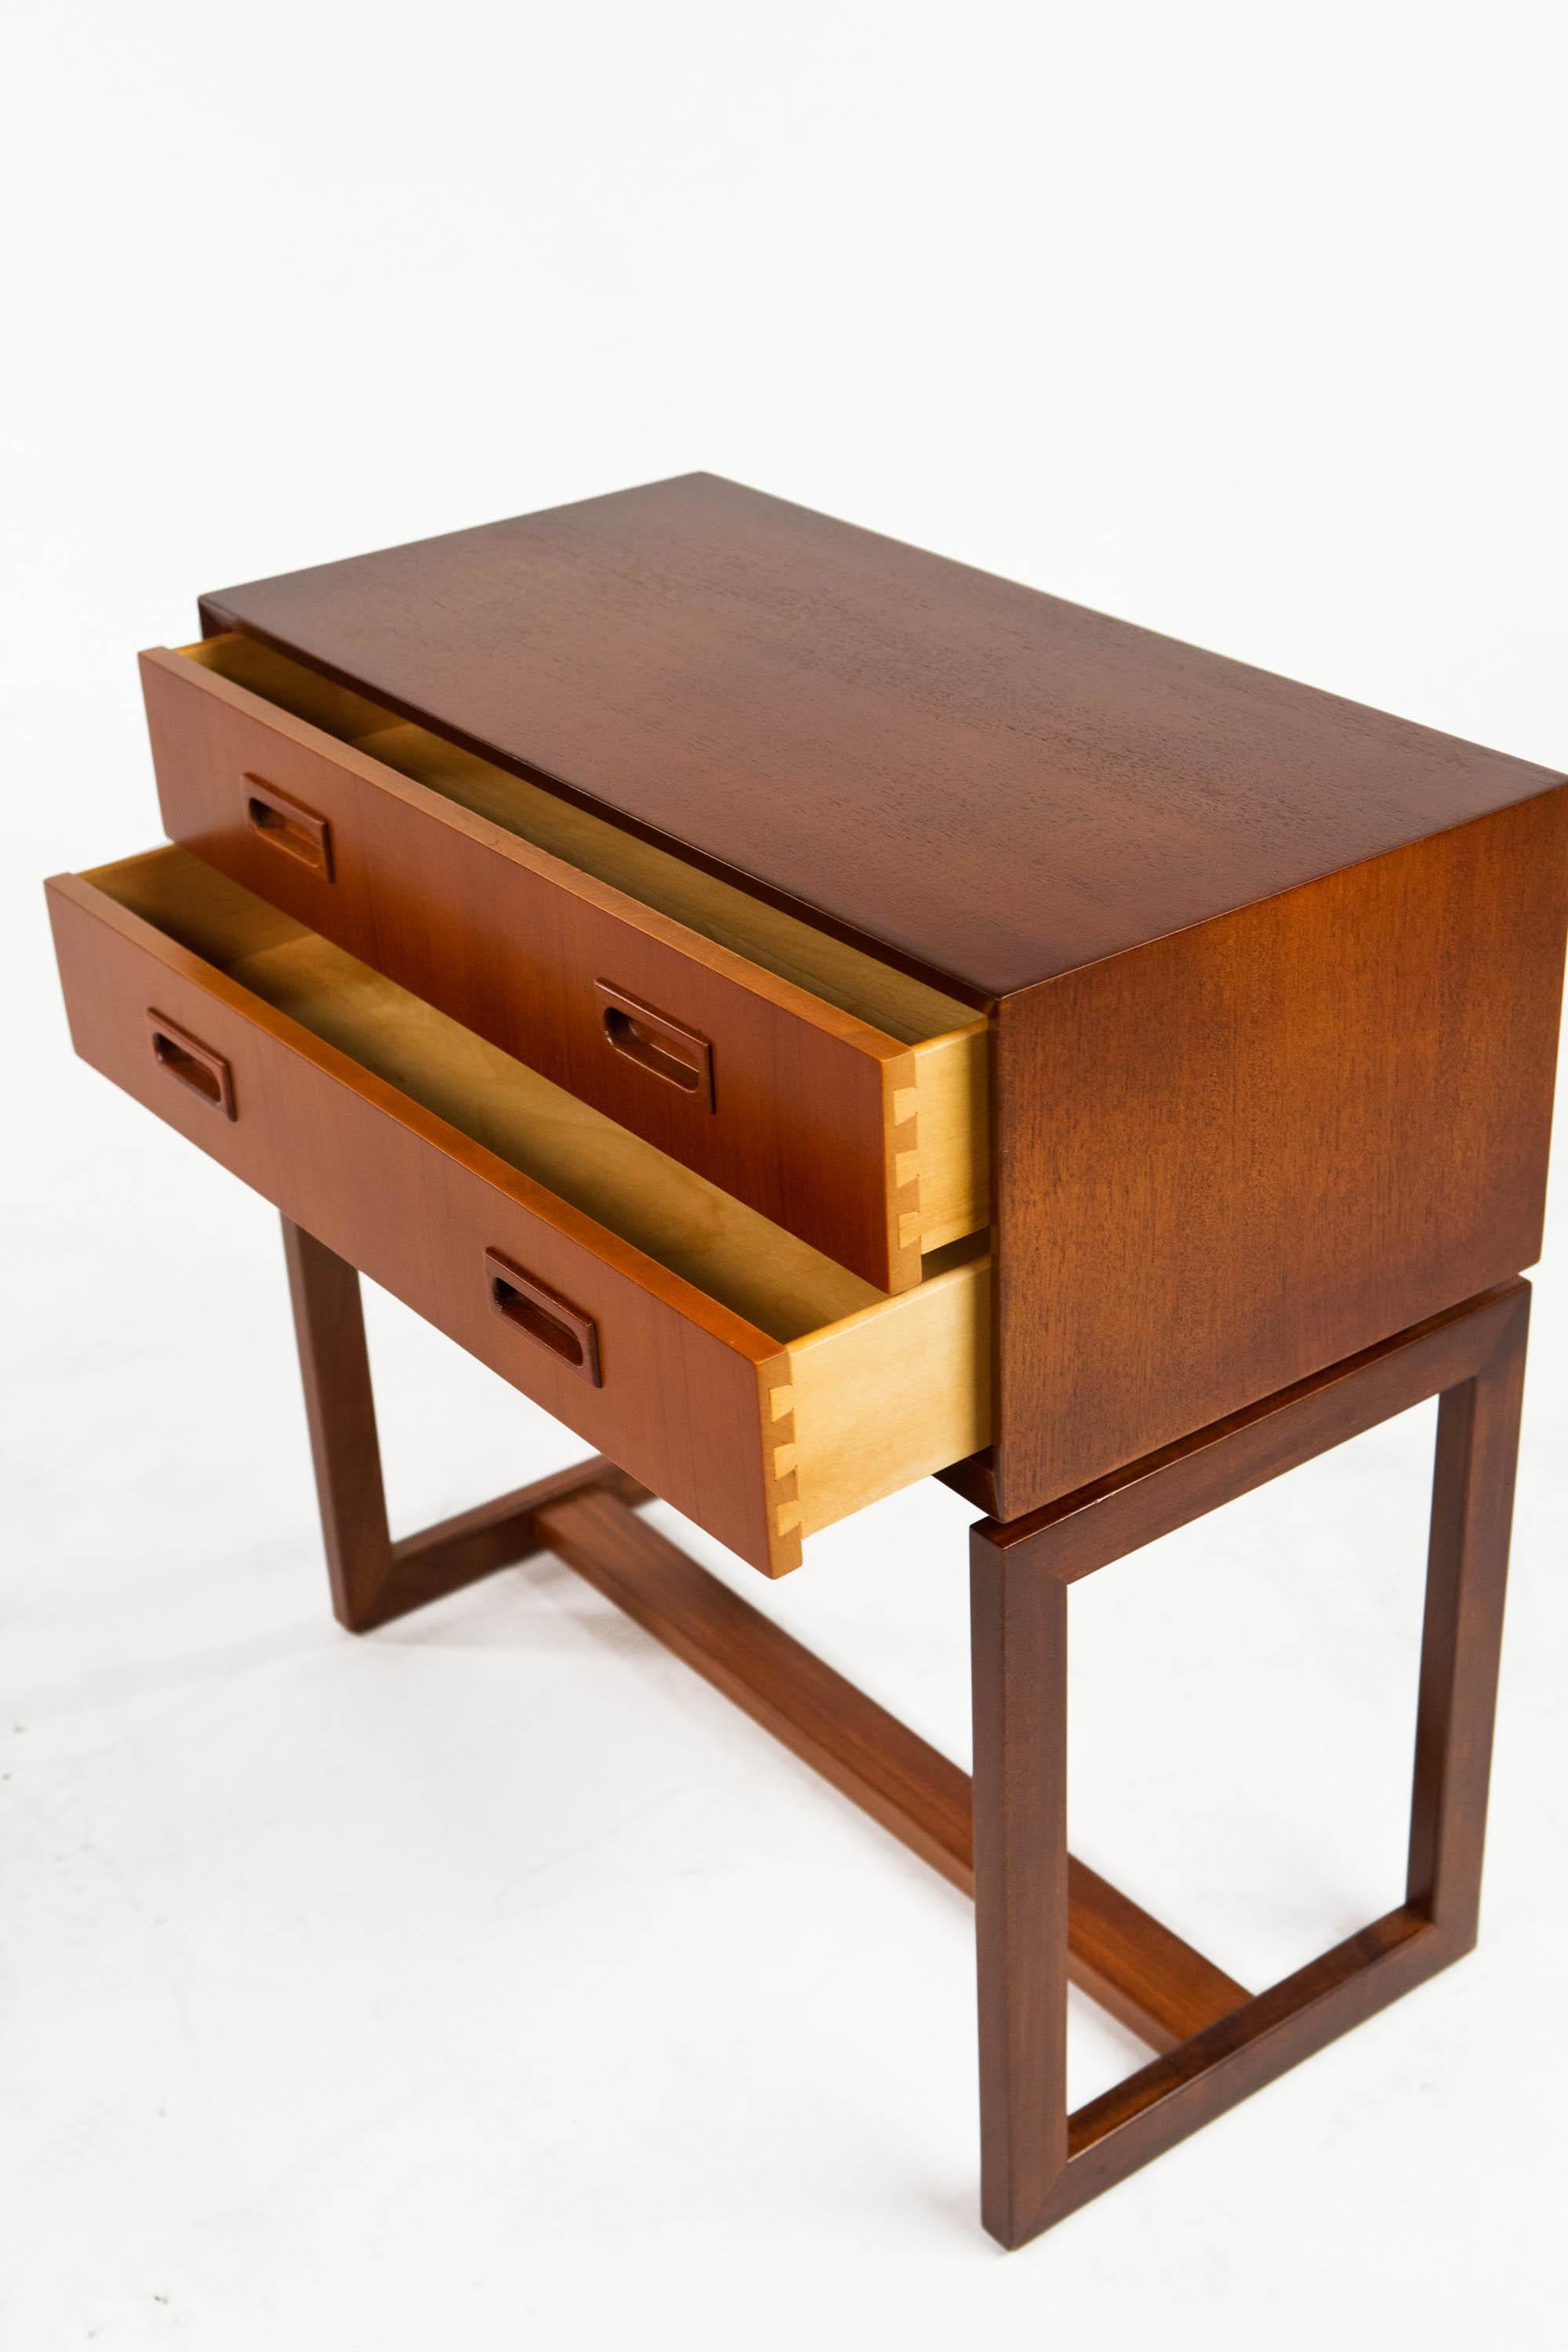 Teak Two Drawer Bureau with Beveled Edge, Danish Design 1950's For Sale 4